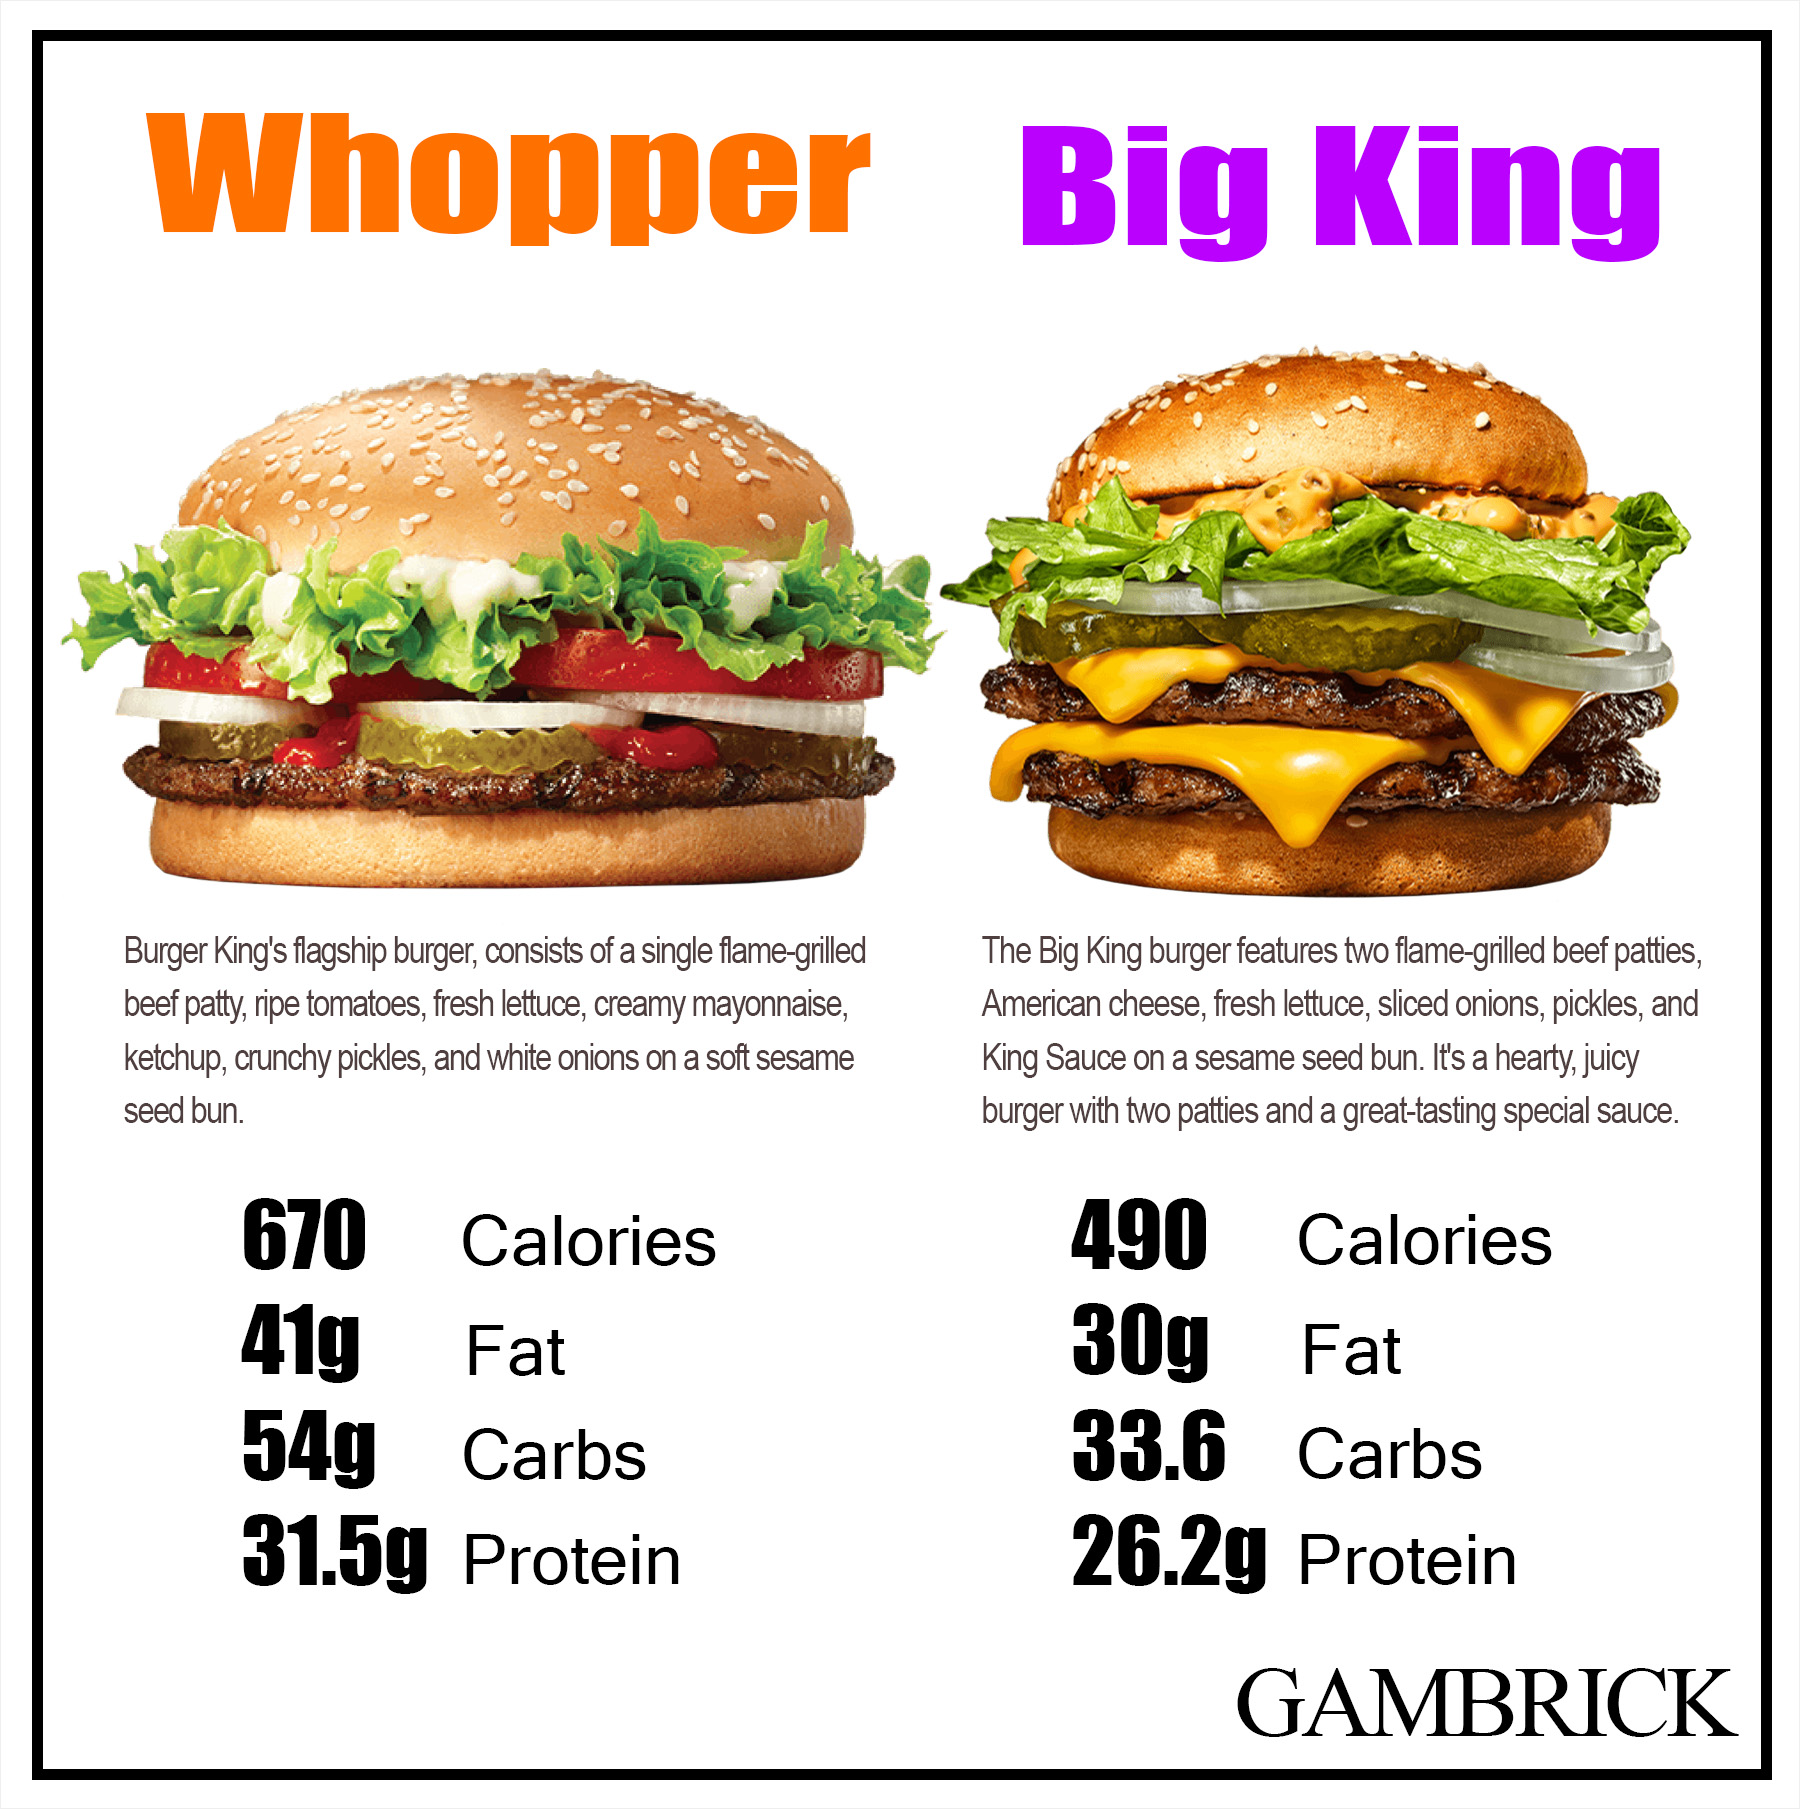 Big King vs Whopper infographic chart 1